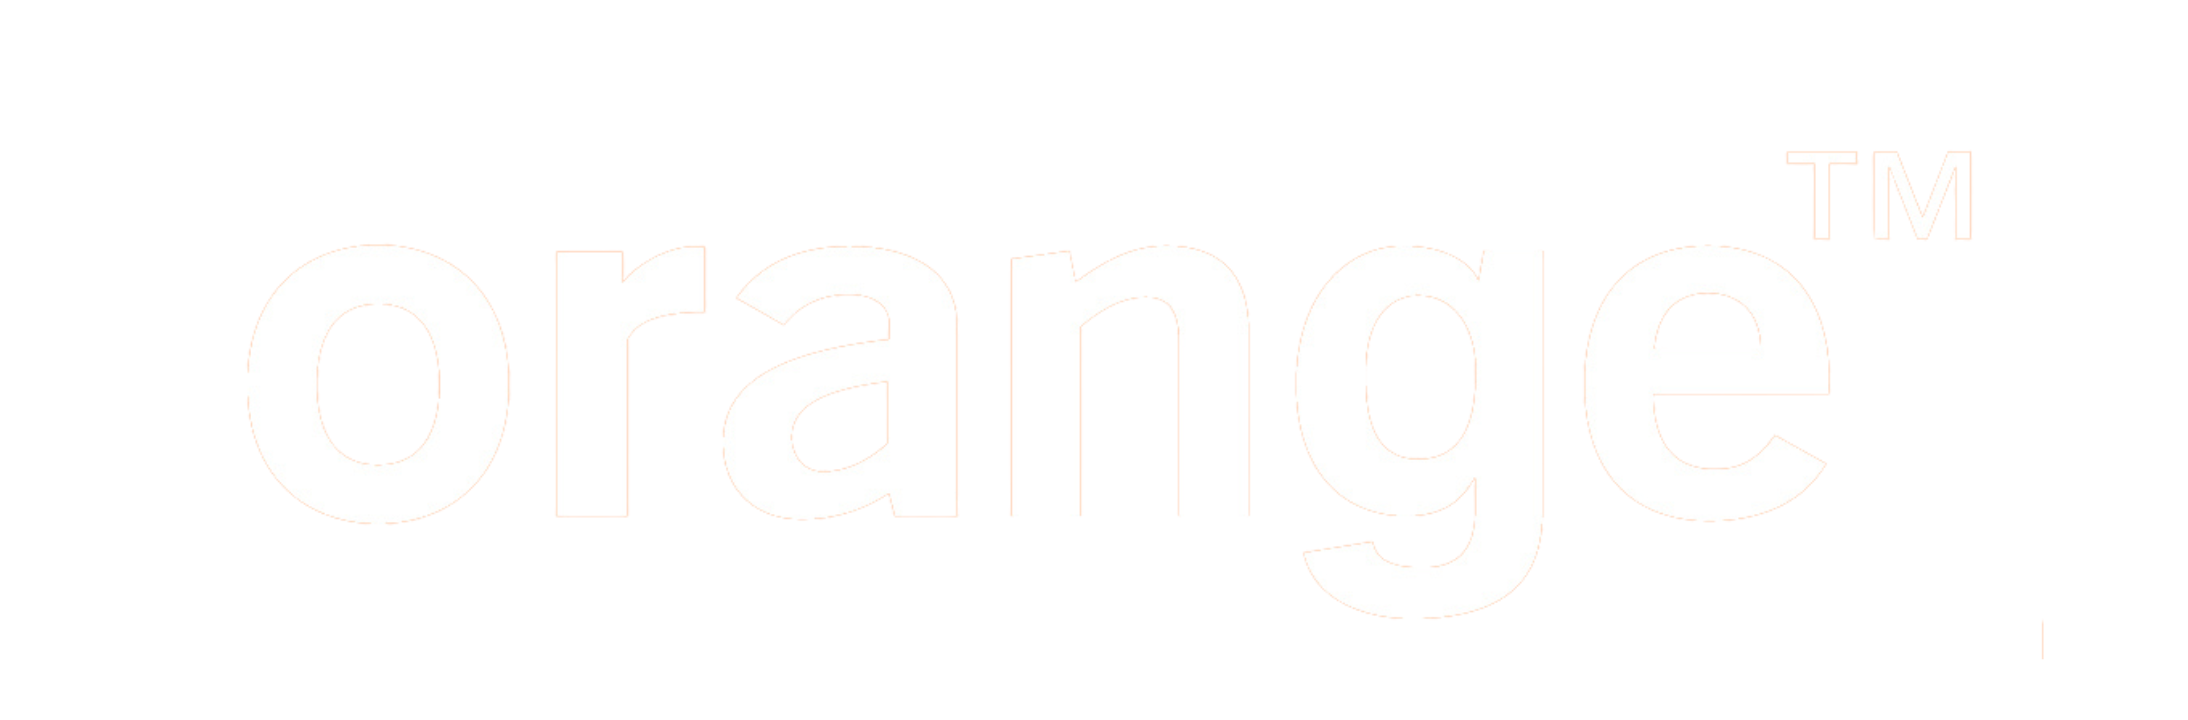 Orange text logo with trademark symbol on a black background.